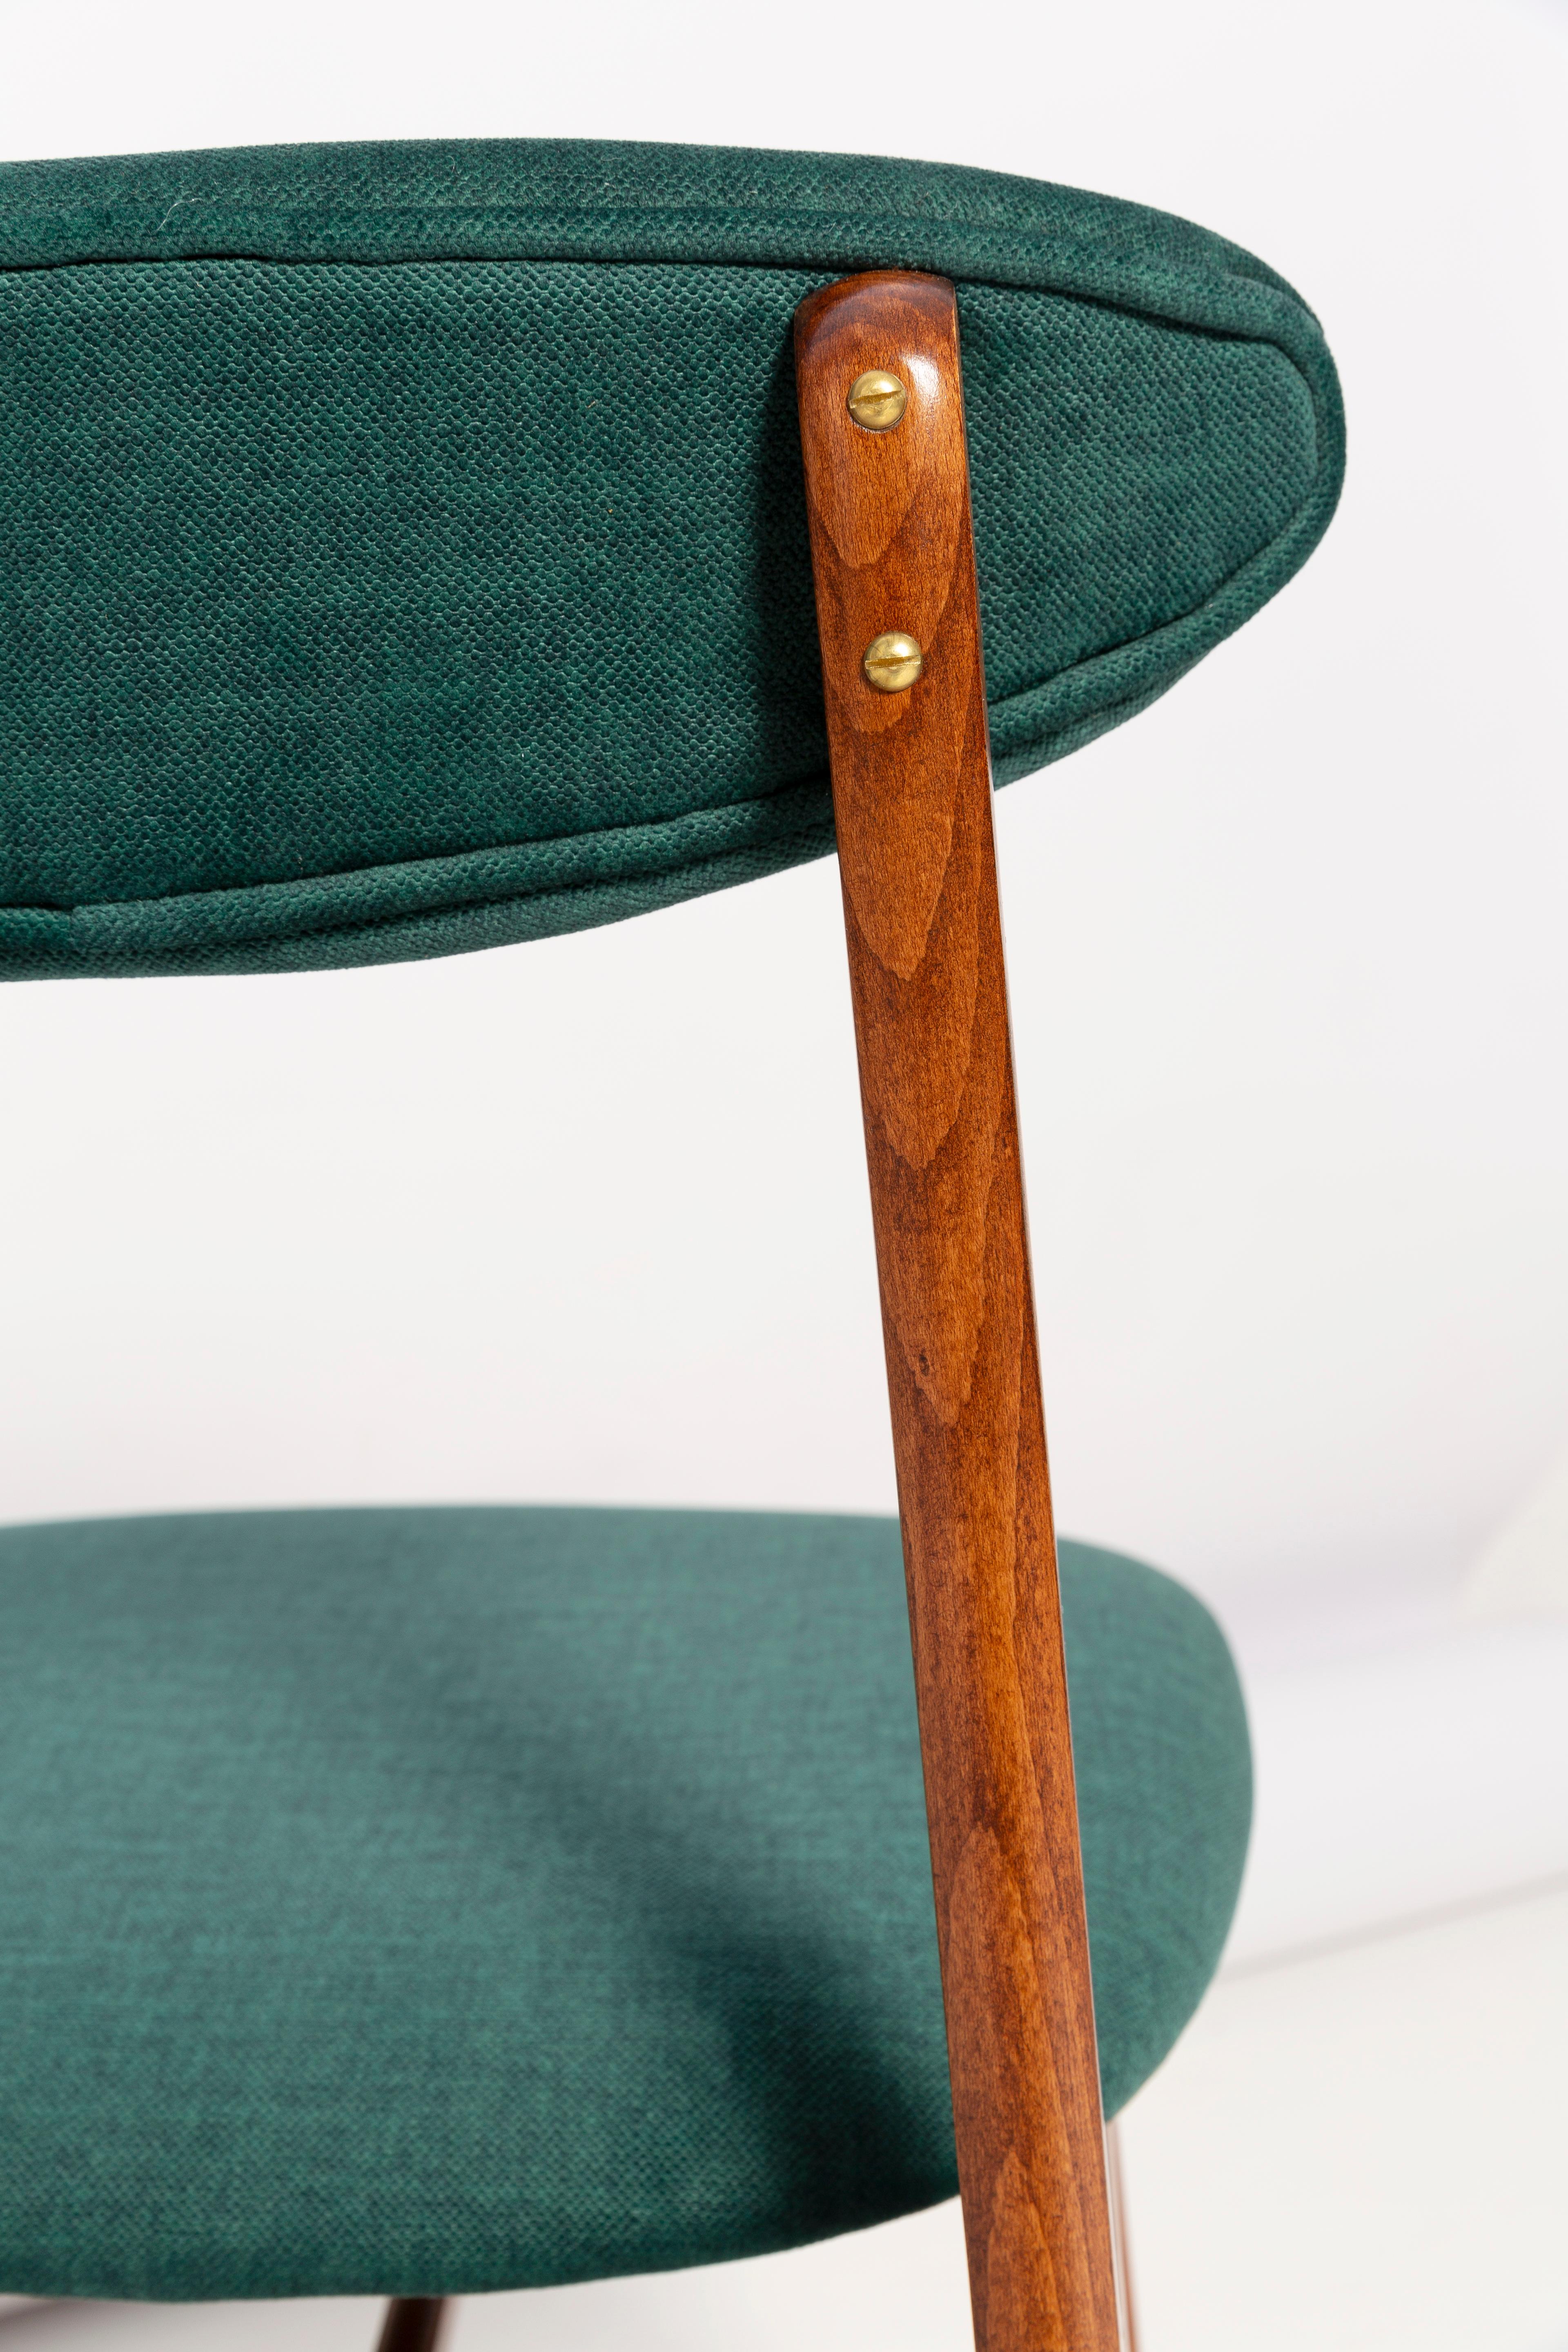 Mid Century Green Velvet Chair Designed by Rajmund Halas, Poland, 1960s For Sale 1